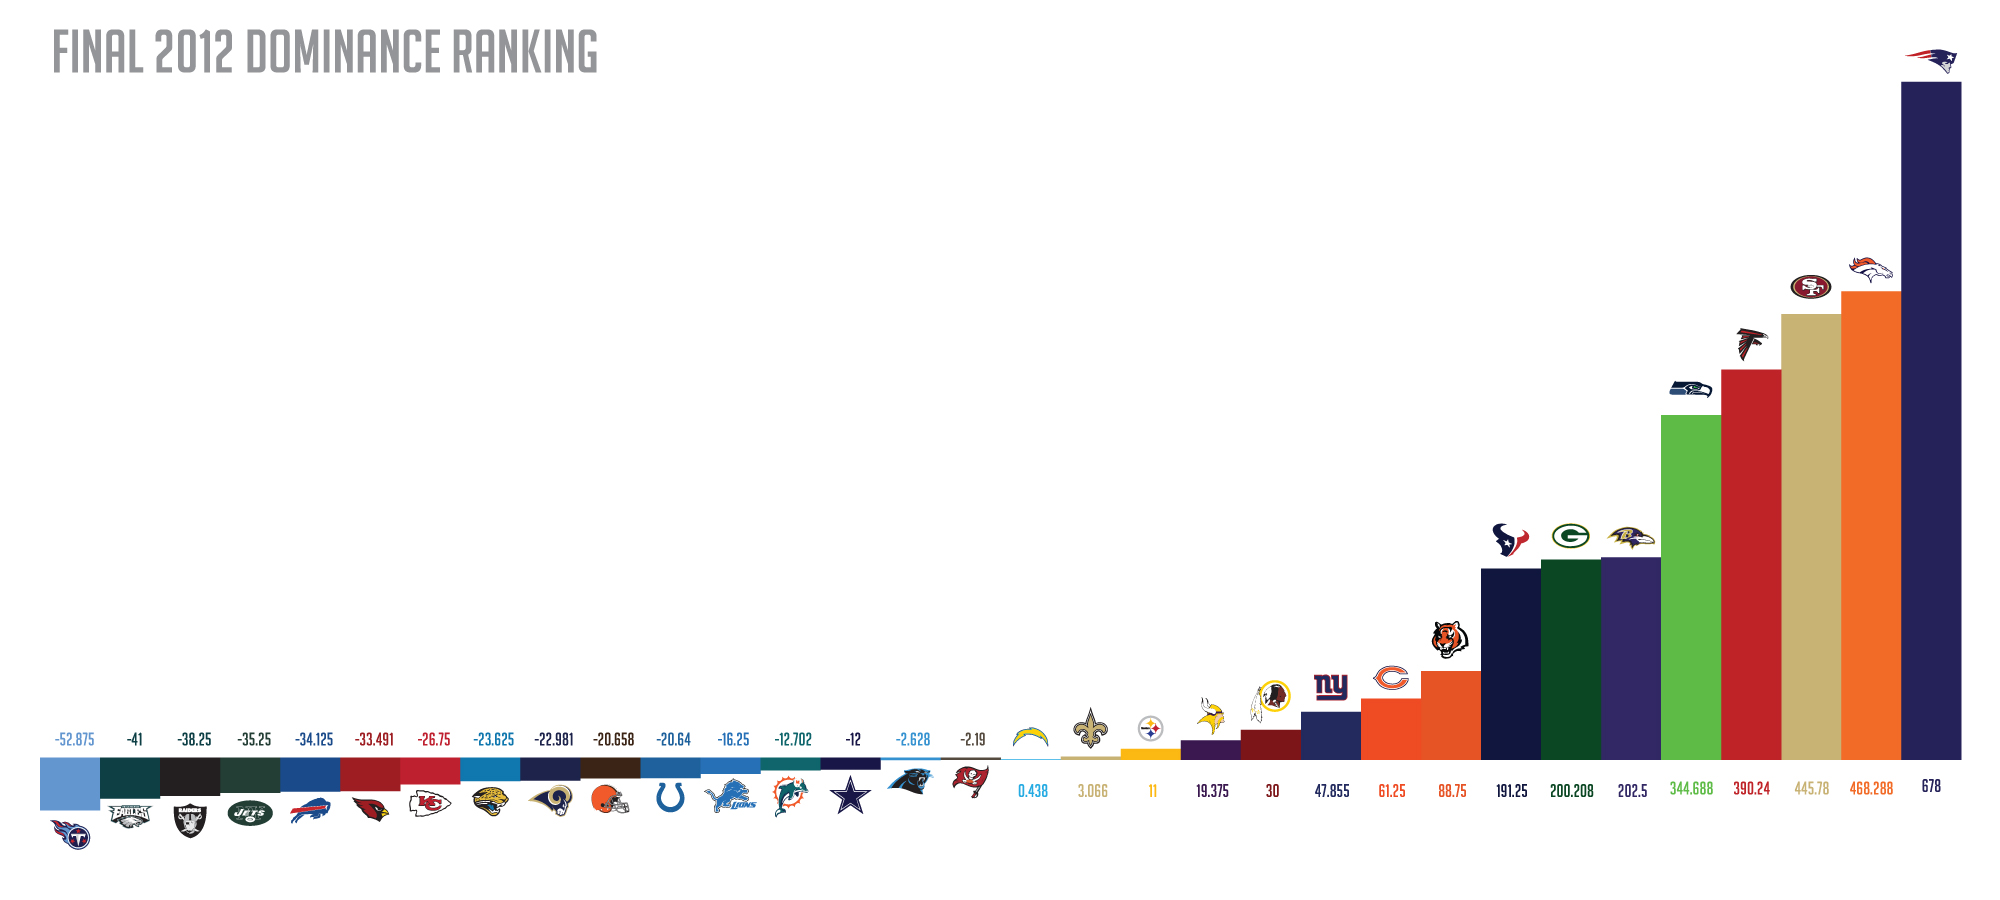 NFL Power Rankings: 2012 NFLFinal Dominance Ranking